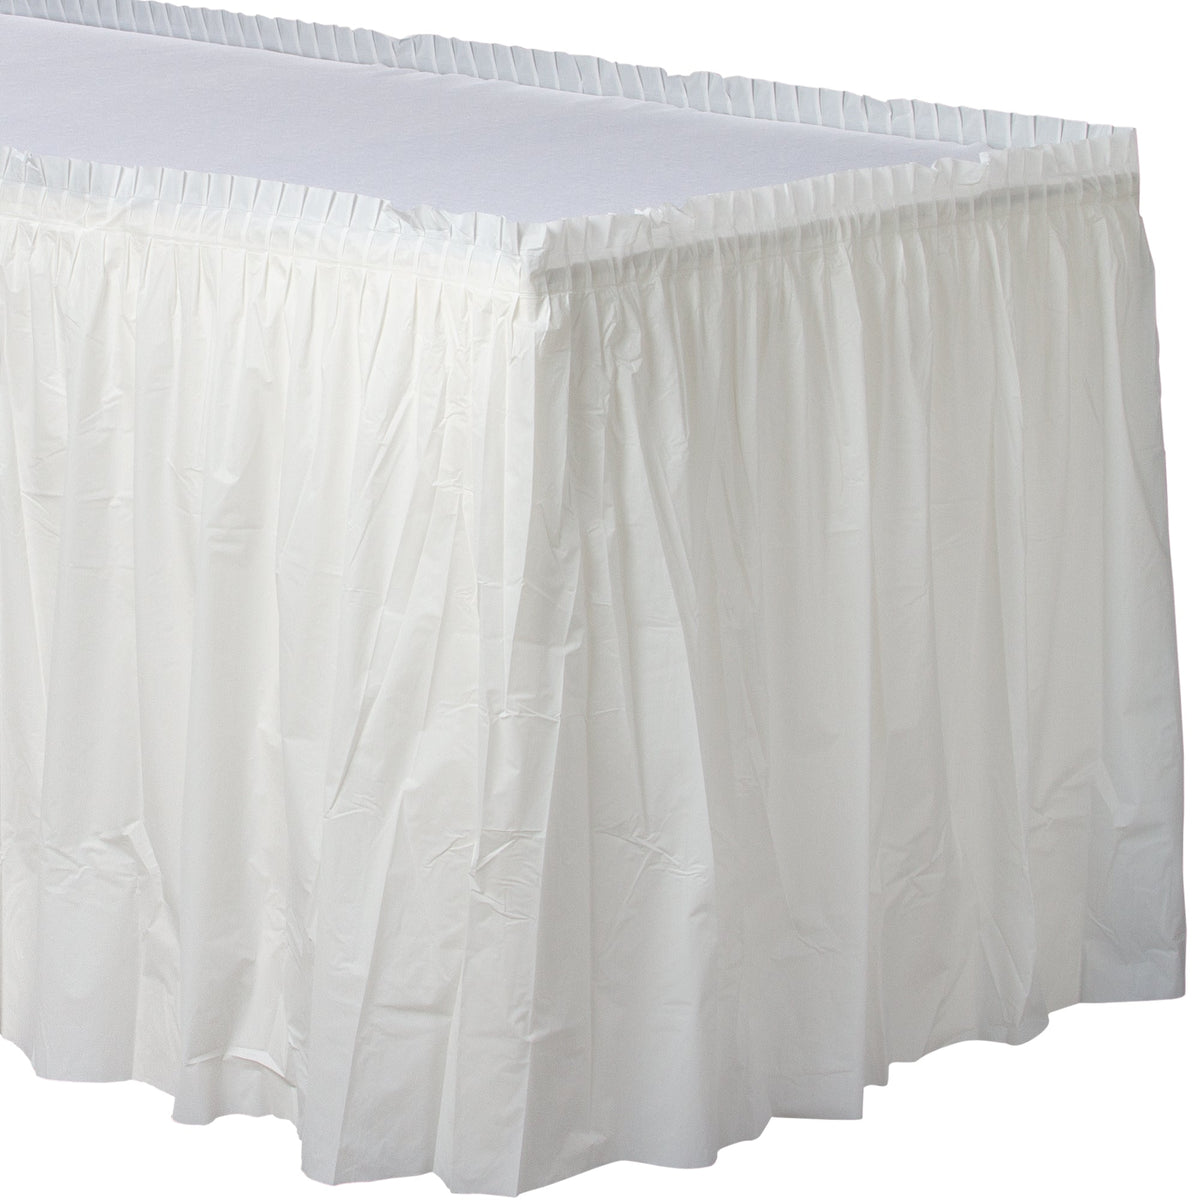 Frosty White 21' x 29" Plastic Table Skirt